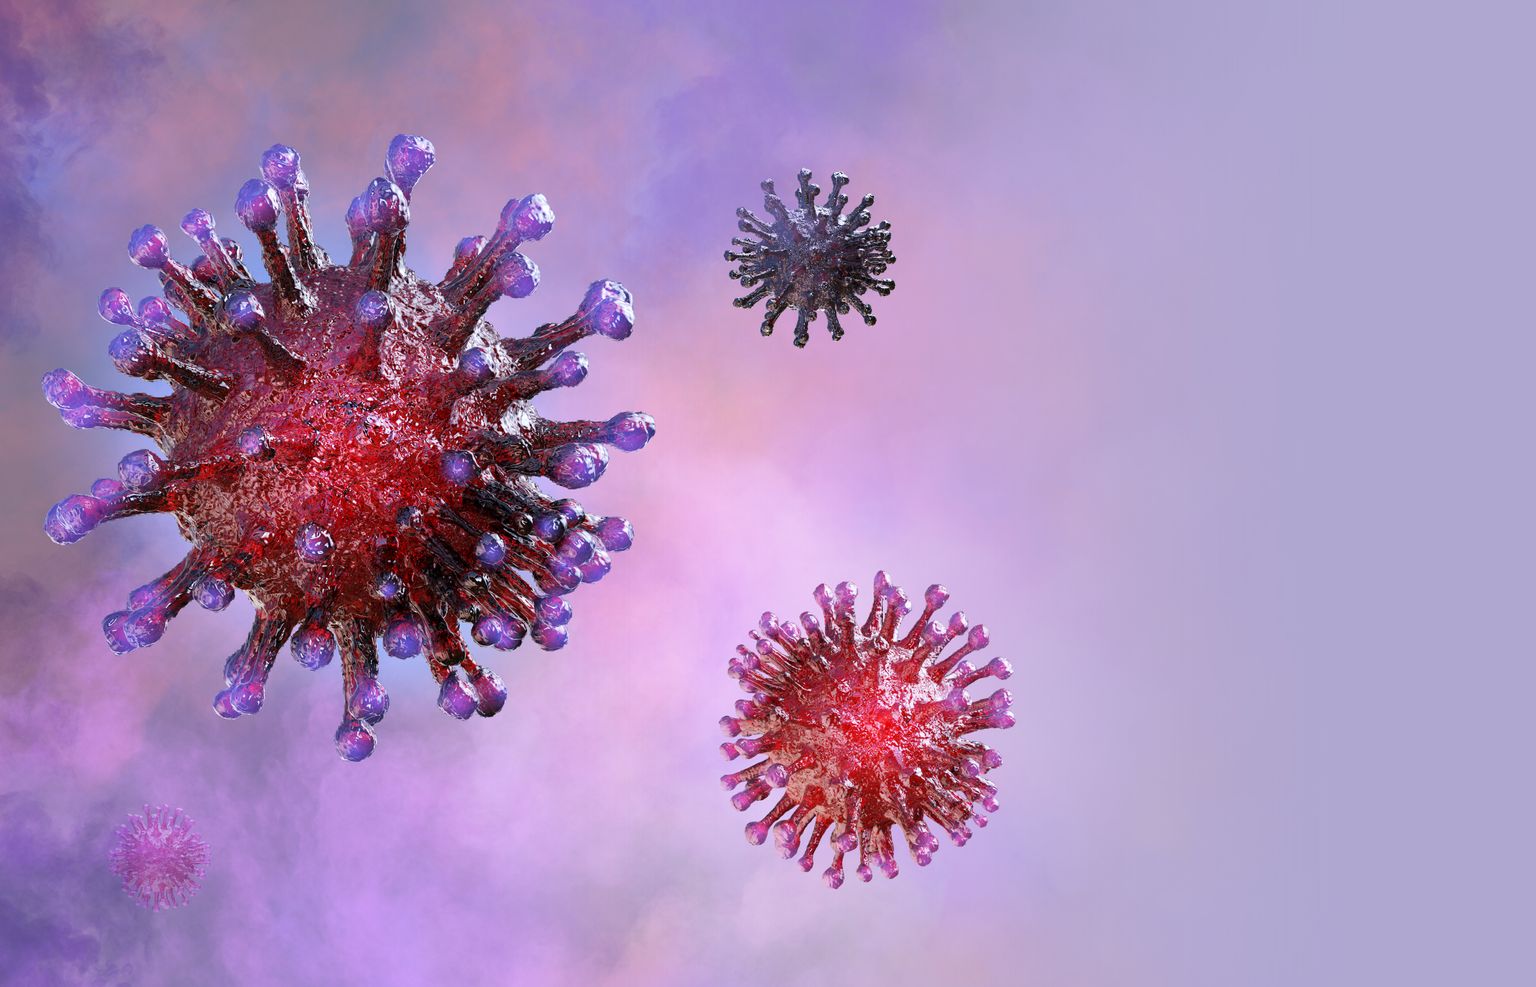 vírus coronavírus respiratório patogénico da gripe 2019-ncov 